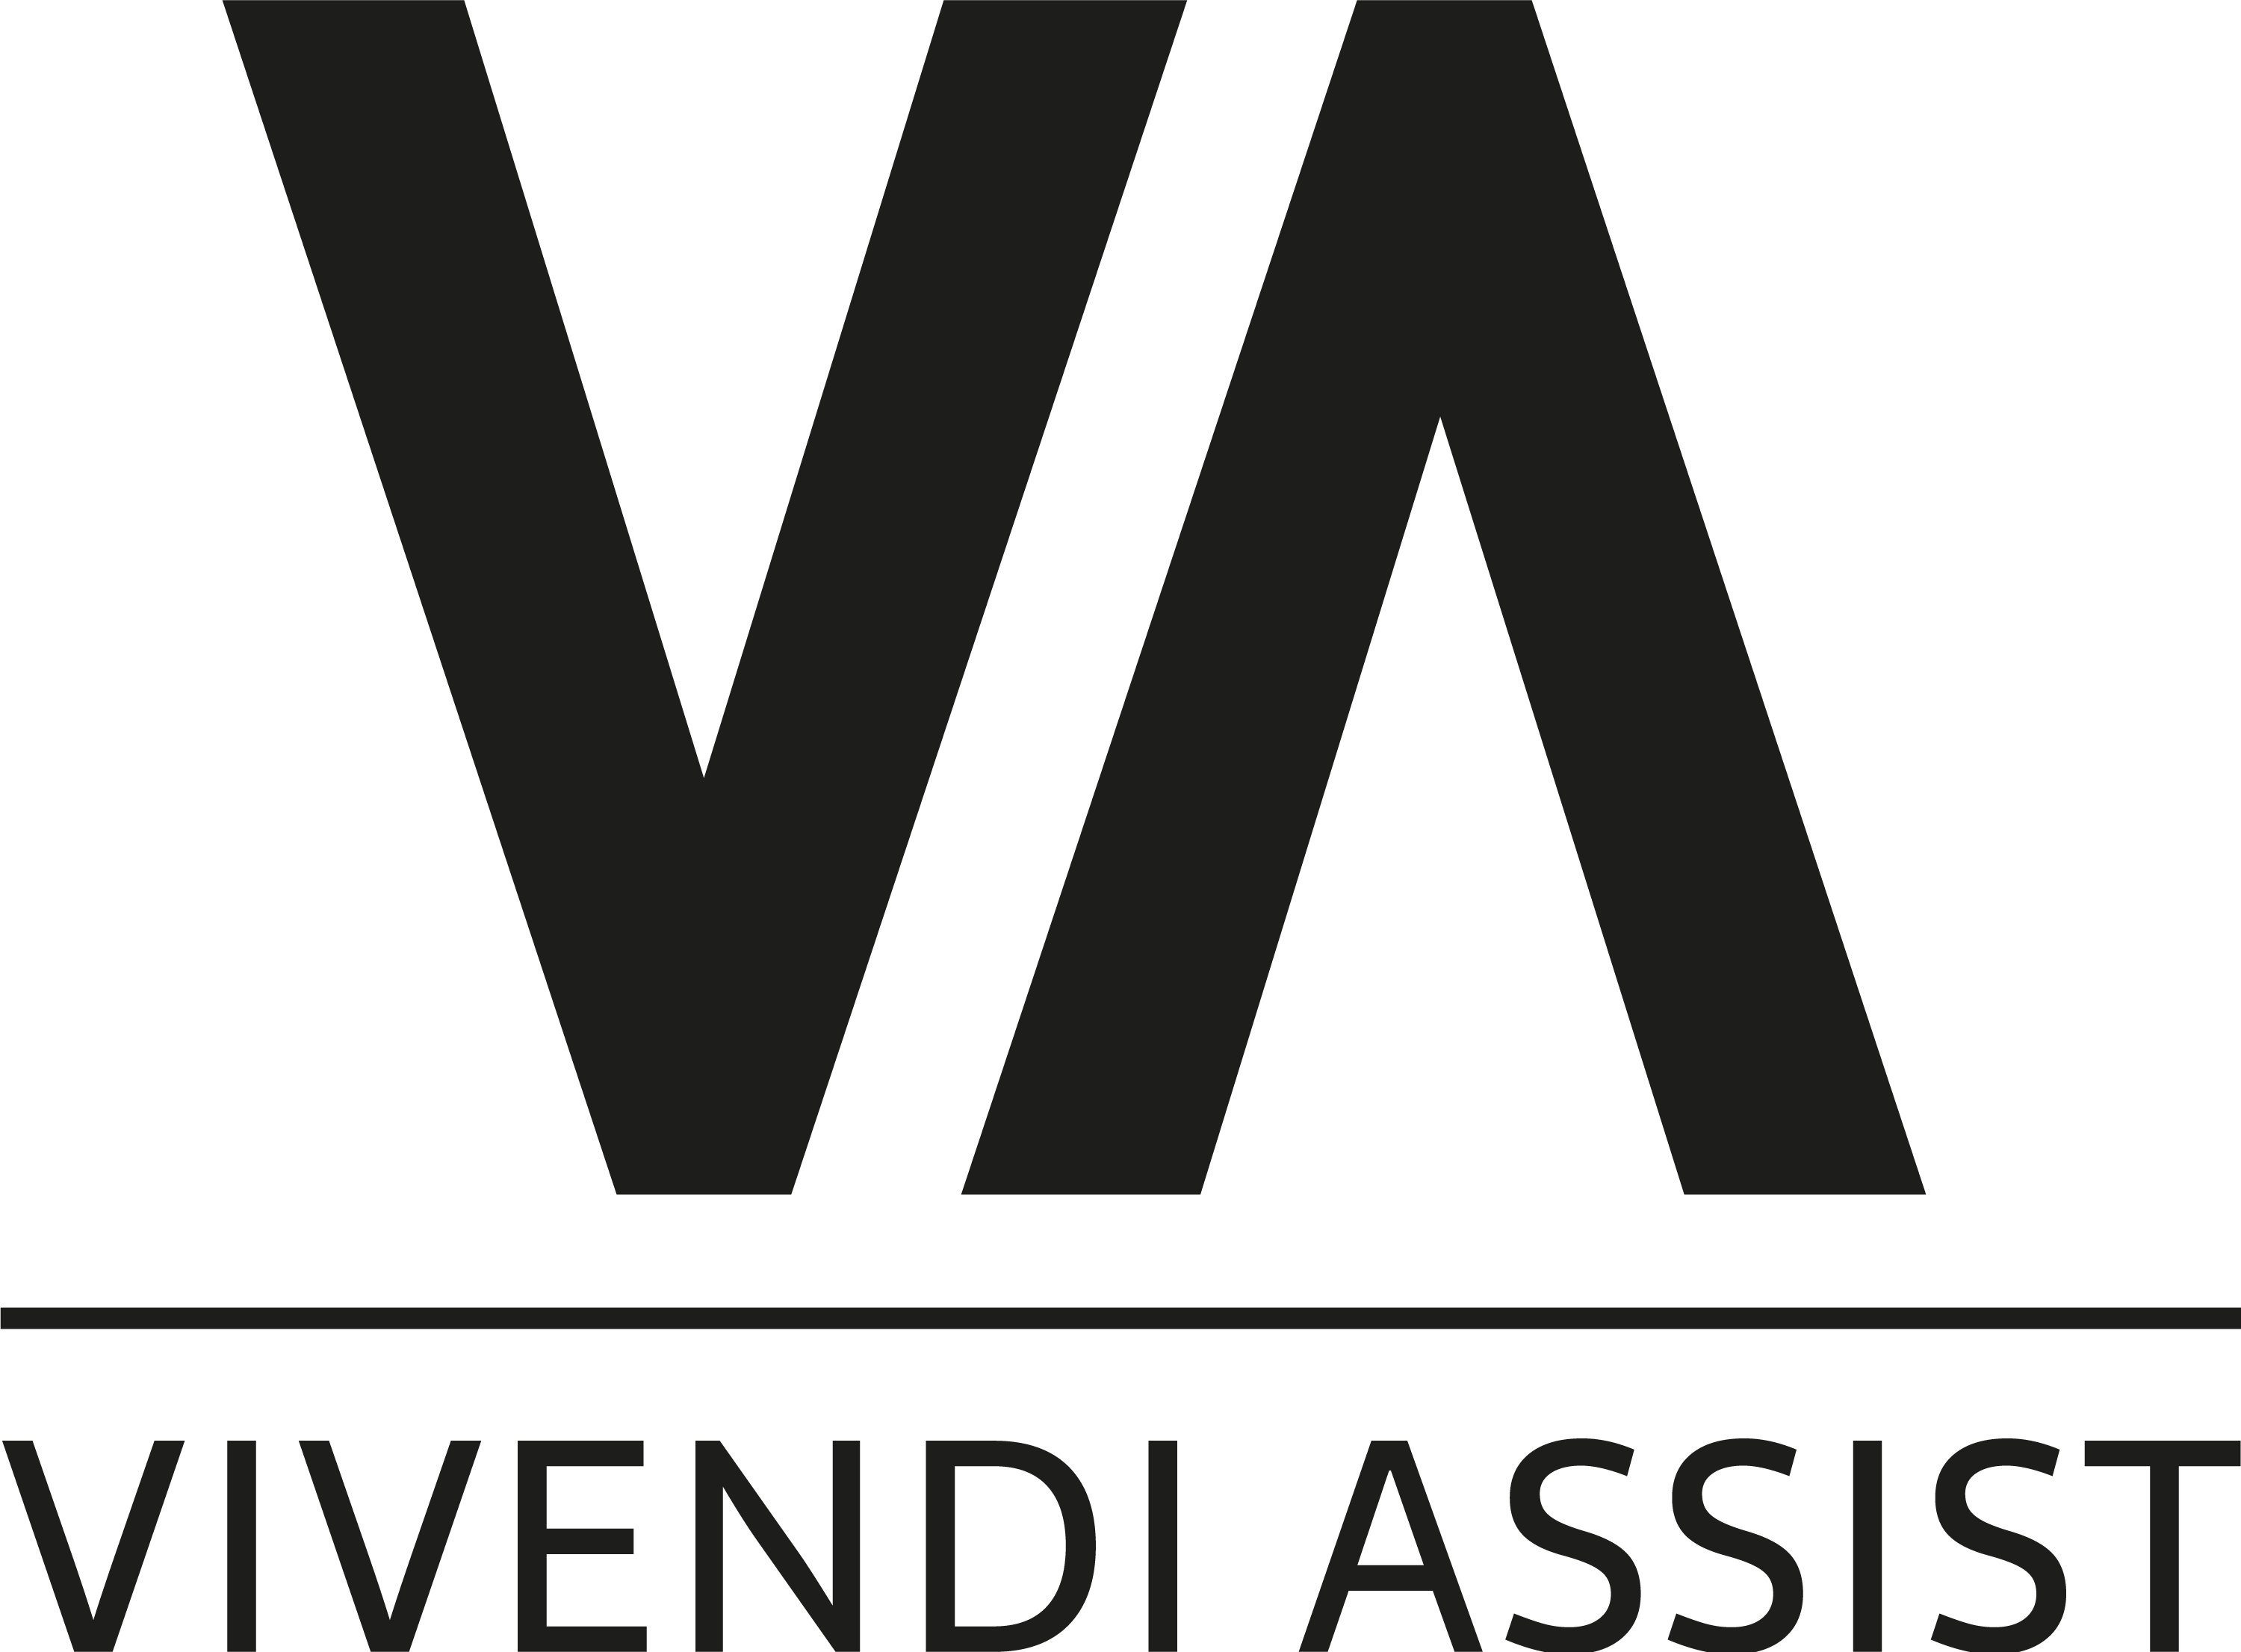 Vivendi Assist [logo]